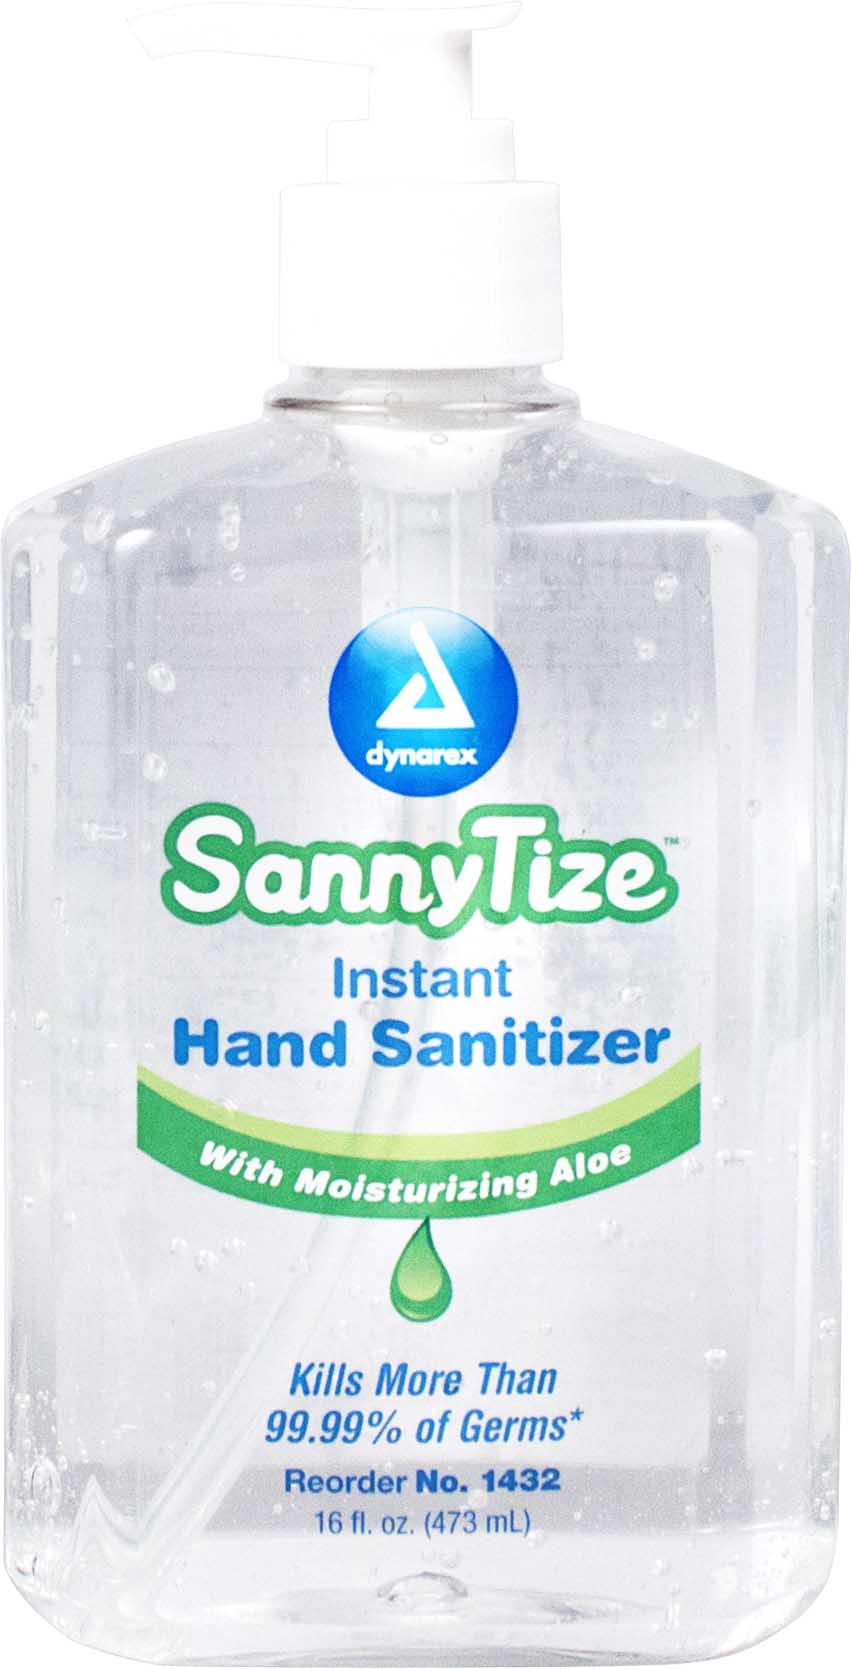 1432 Dynarex Sannytize即时洗手液含有62%的酒精，装在16盎司的瓶子里